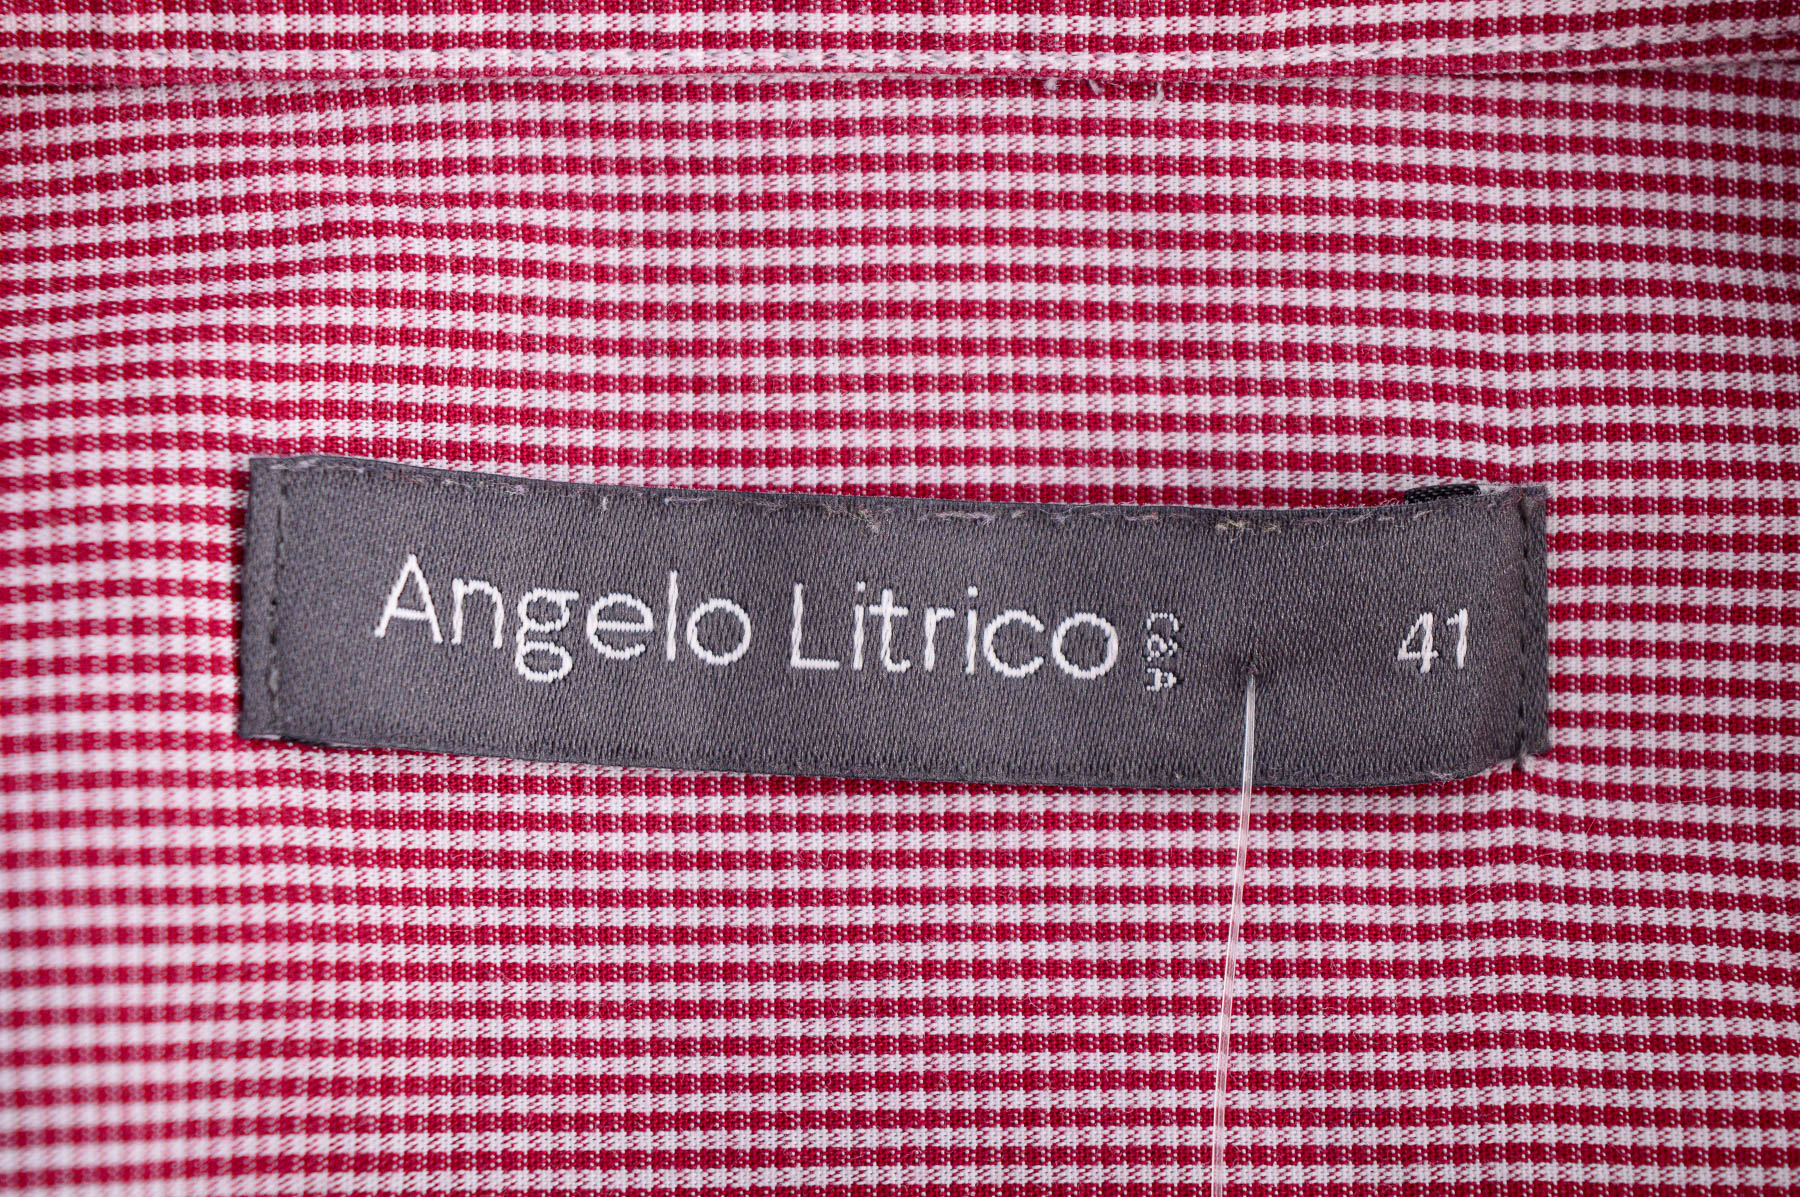 Męska koszula - Angelo Litrico - 2